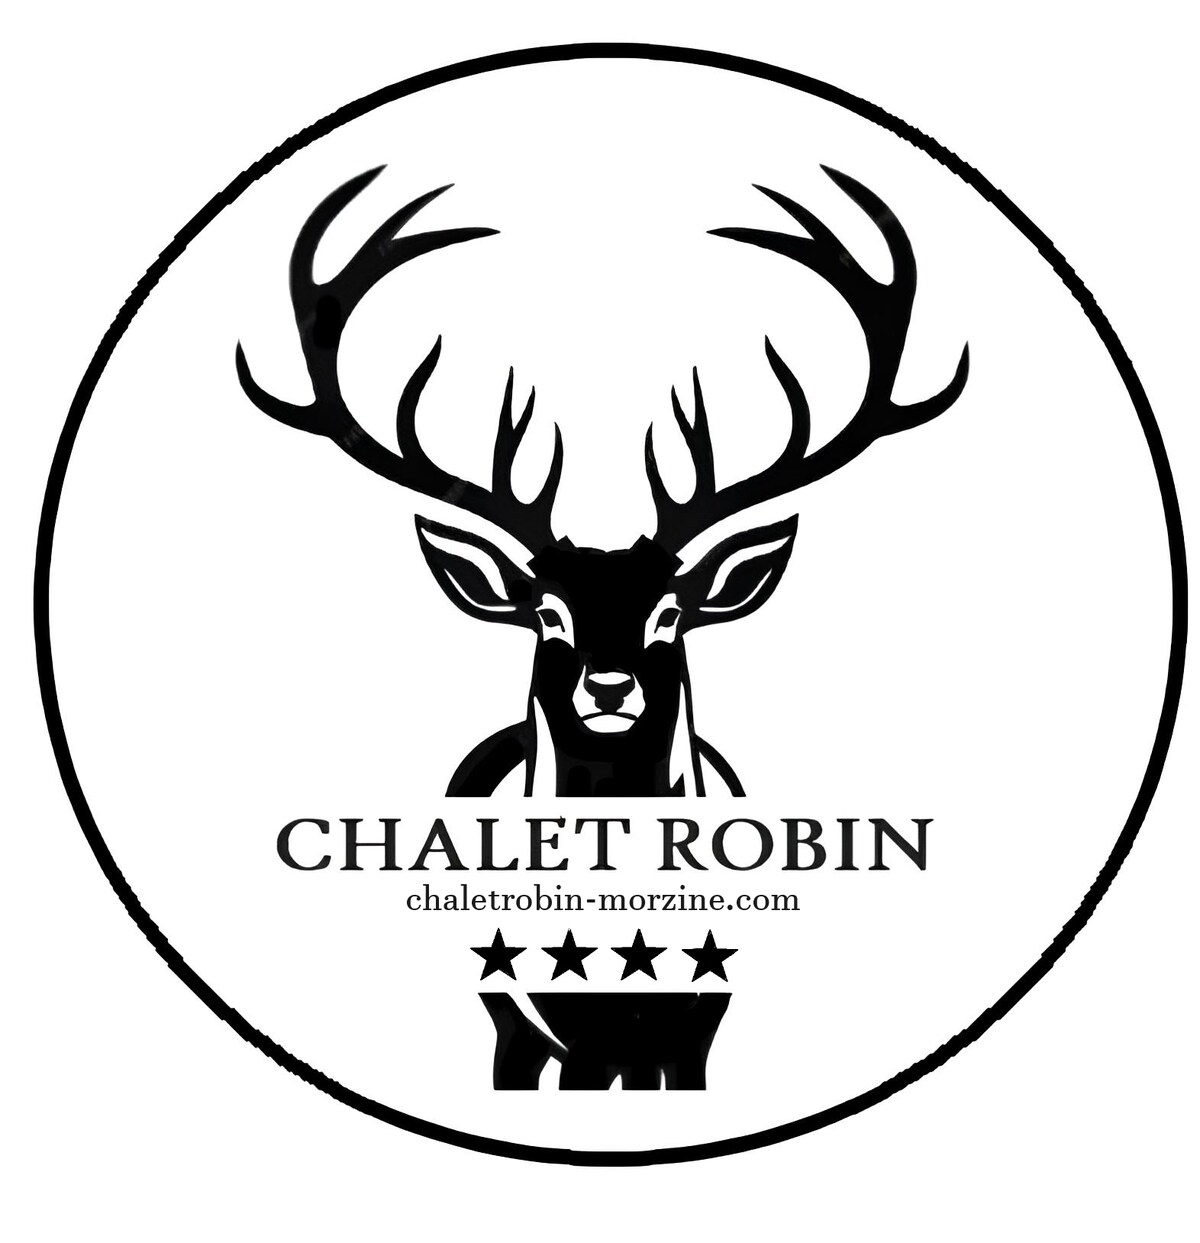 Chalet robin 4*: proximity, quiet, outdoor SPA